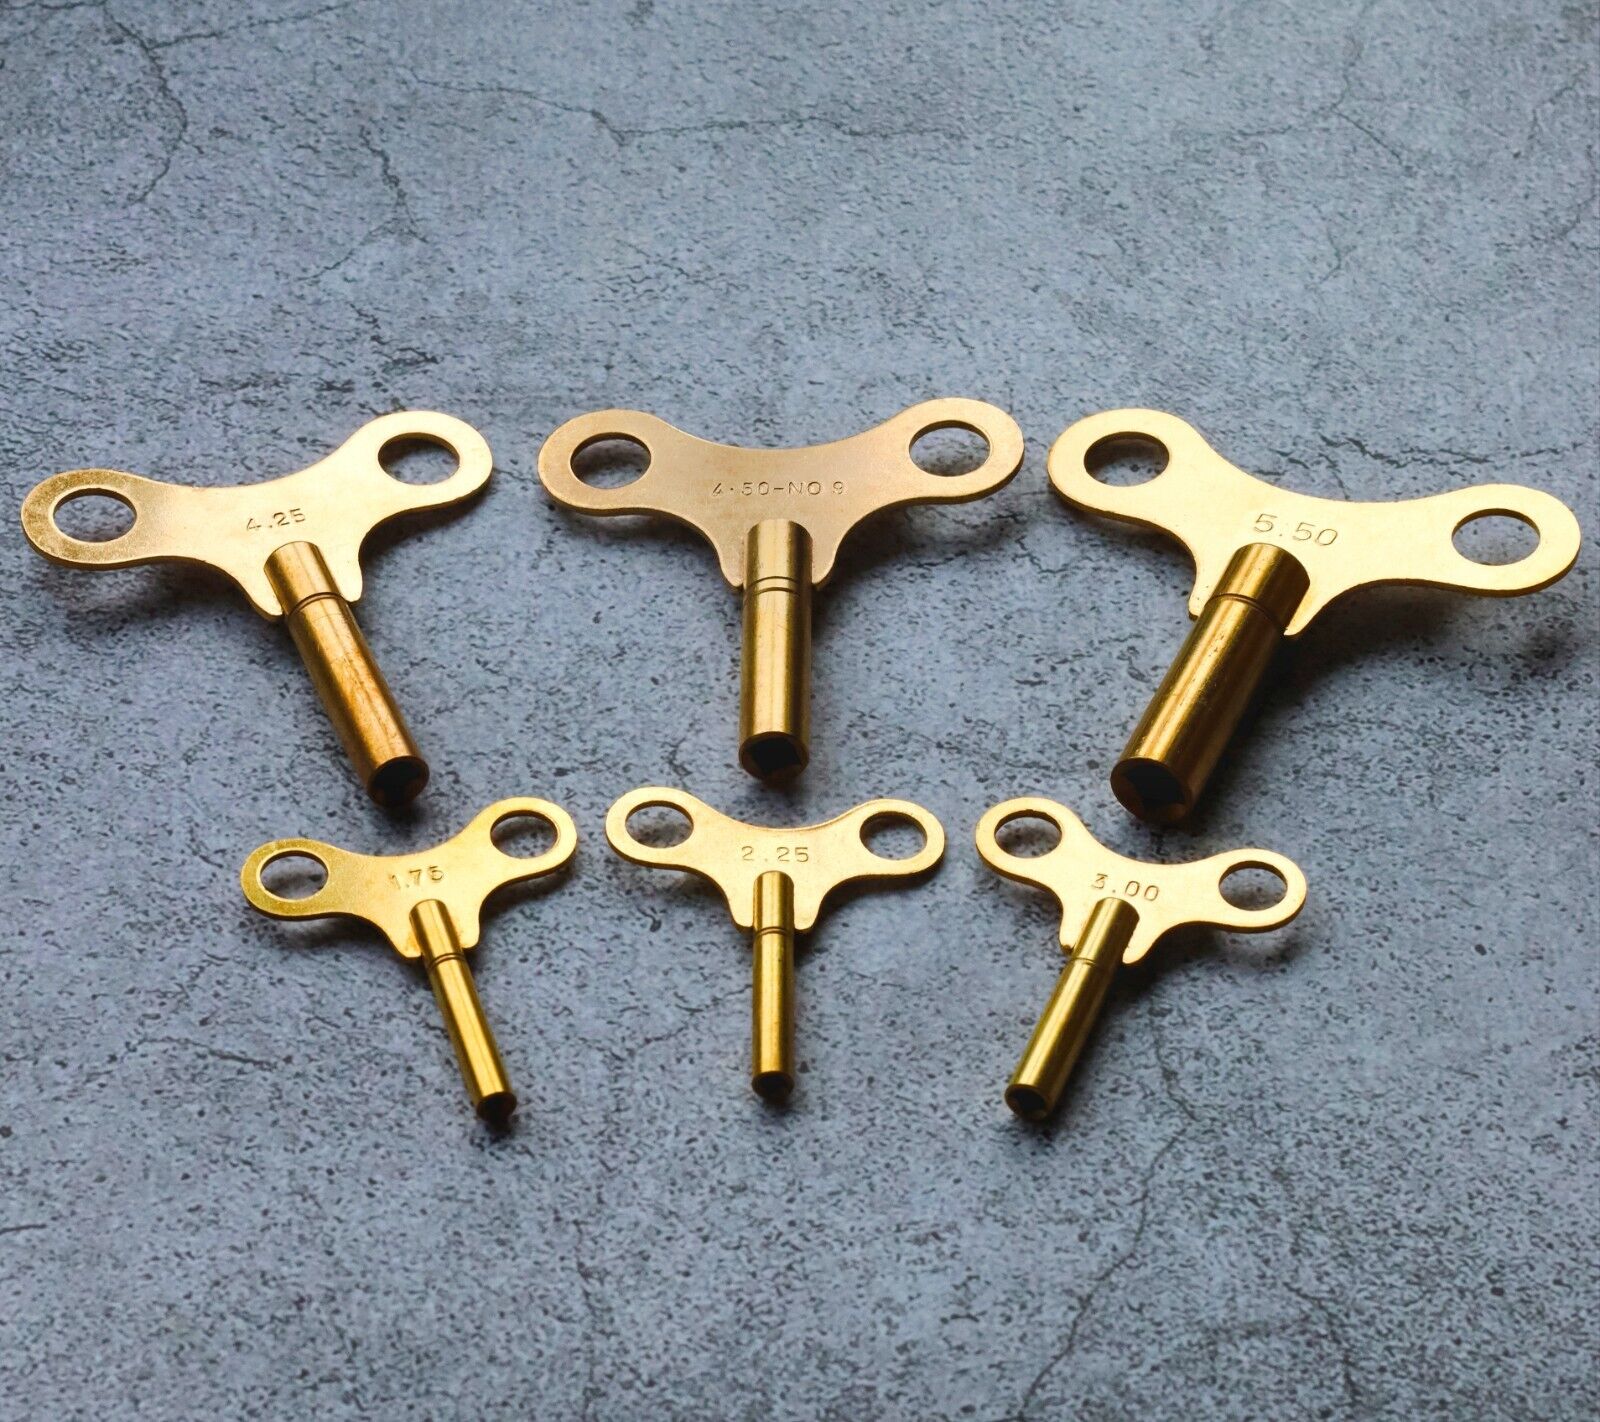 1 pcs of Clock Key Universal Key Clock Key Repair Tool Brass all sizes 0 to 18